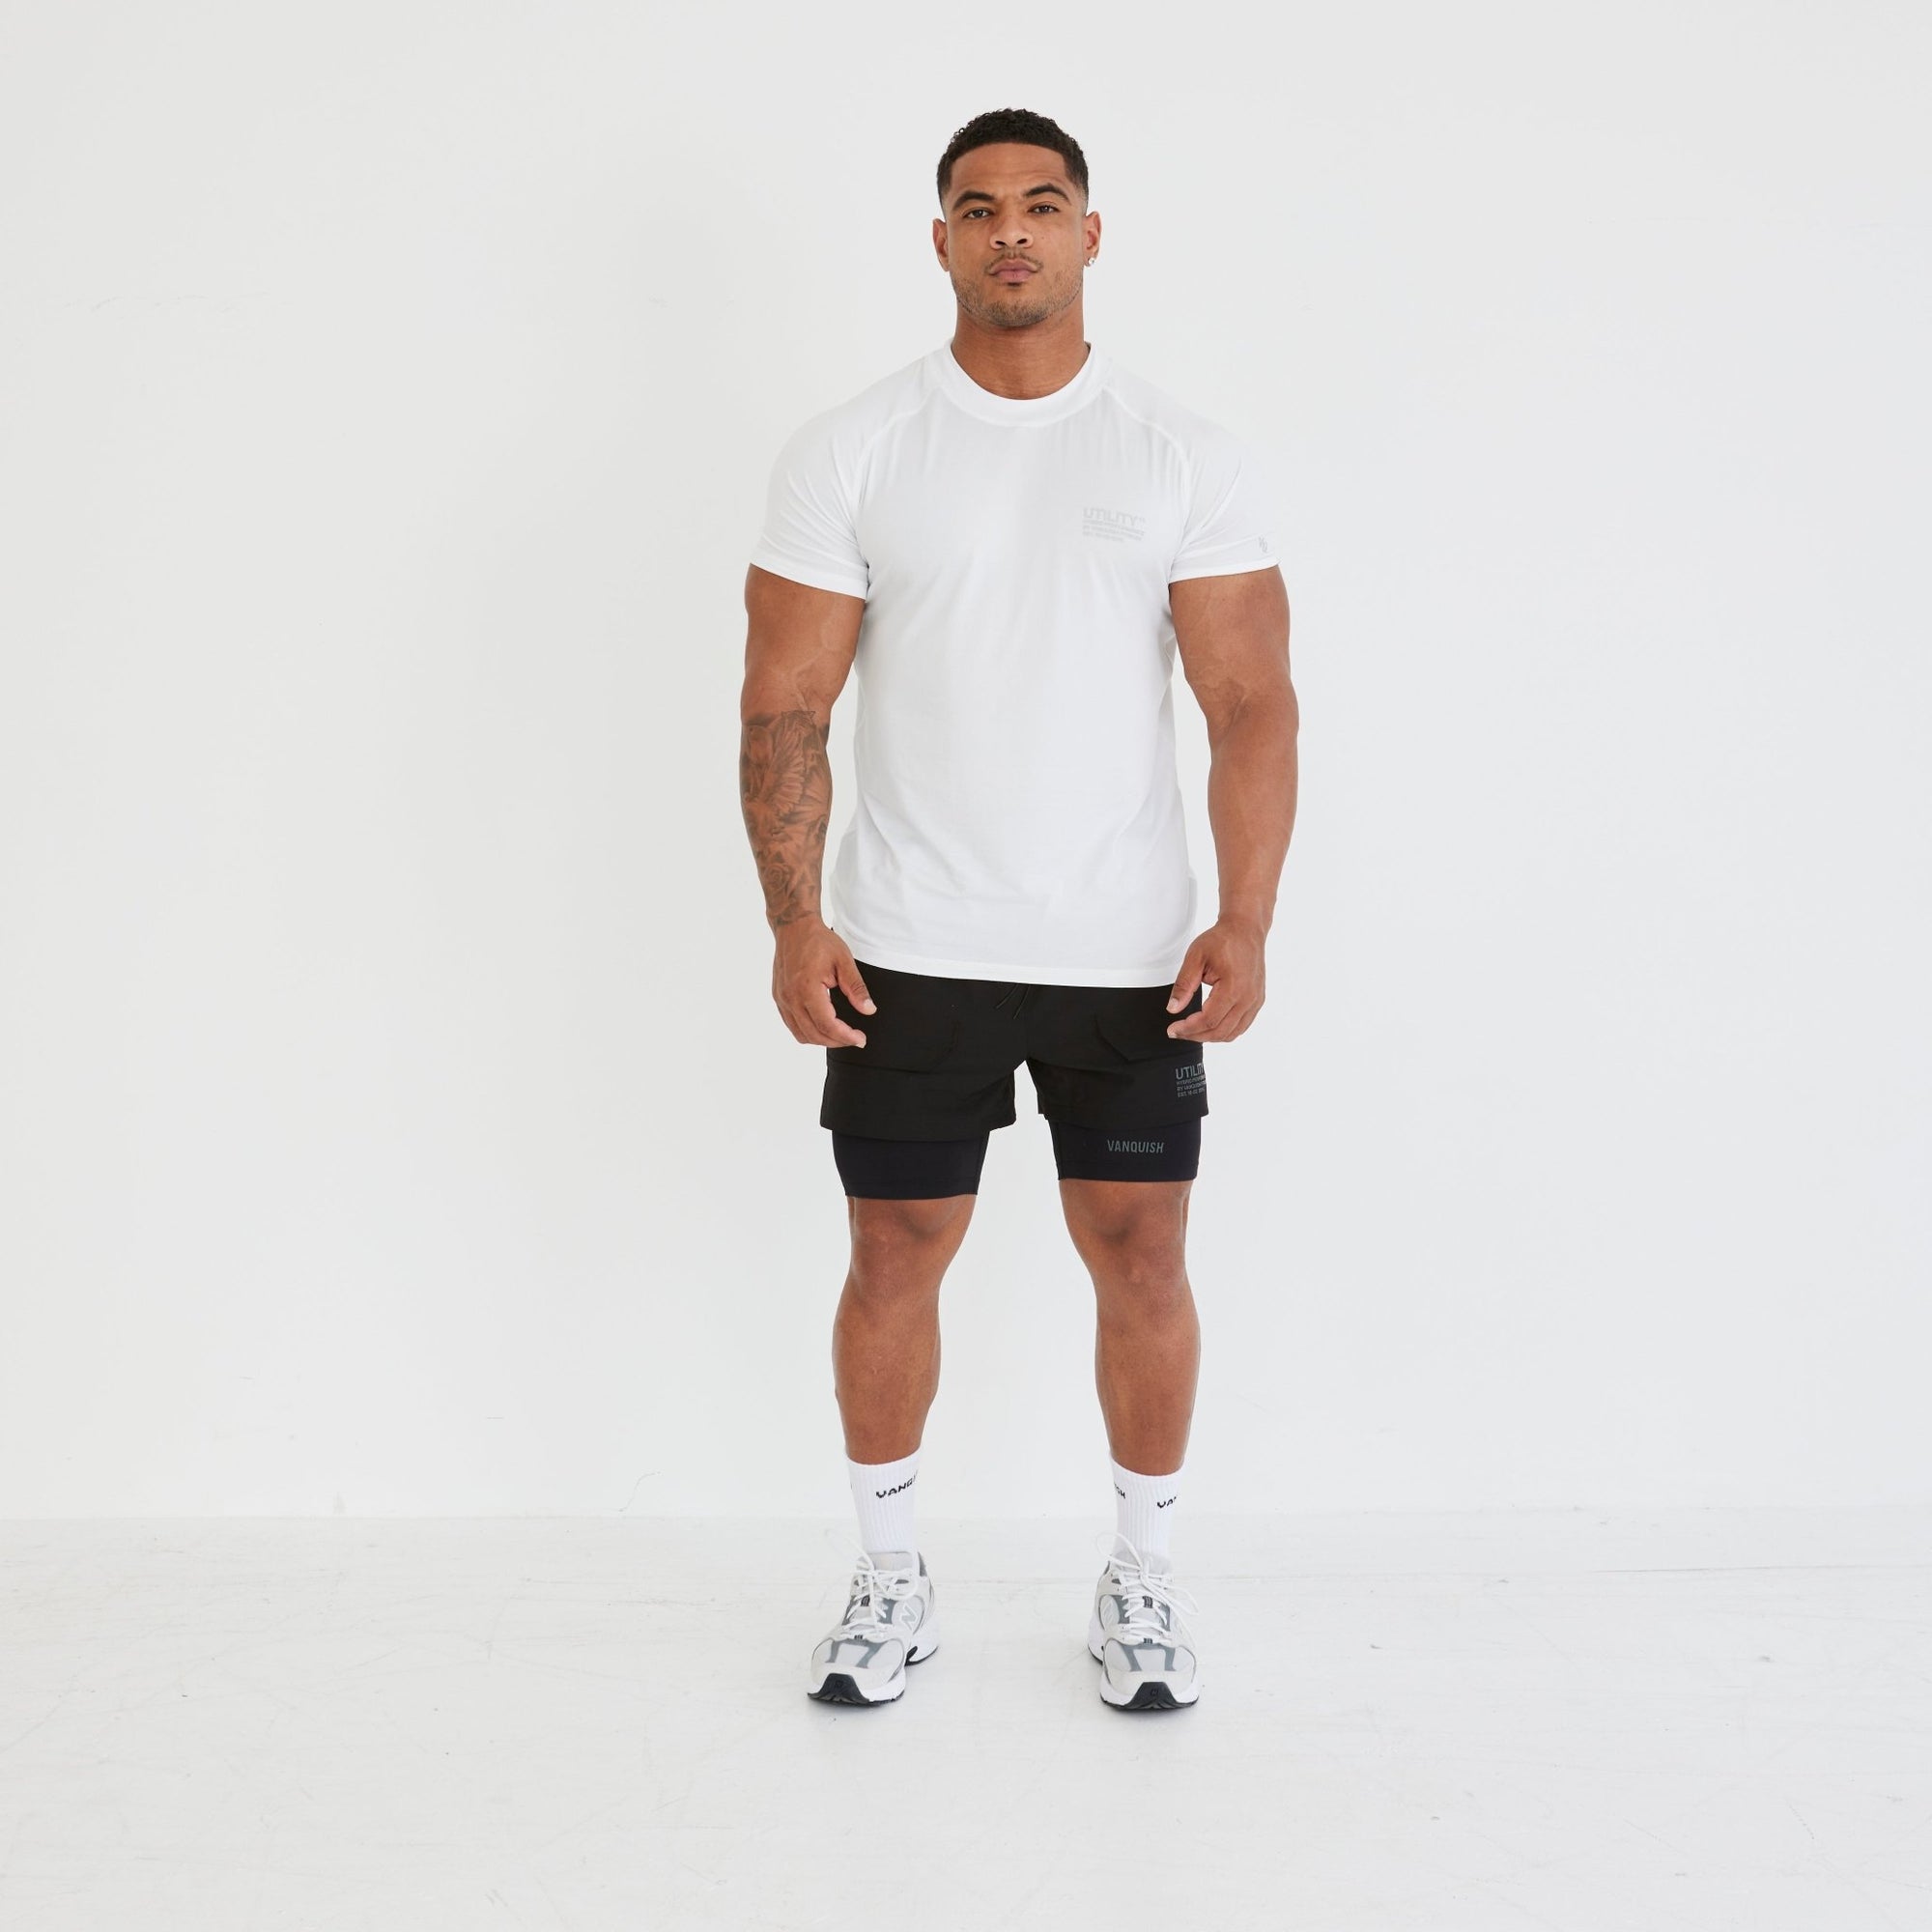 Vanquish Utility Black Base Layer Shorts - Vanquish Fitness